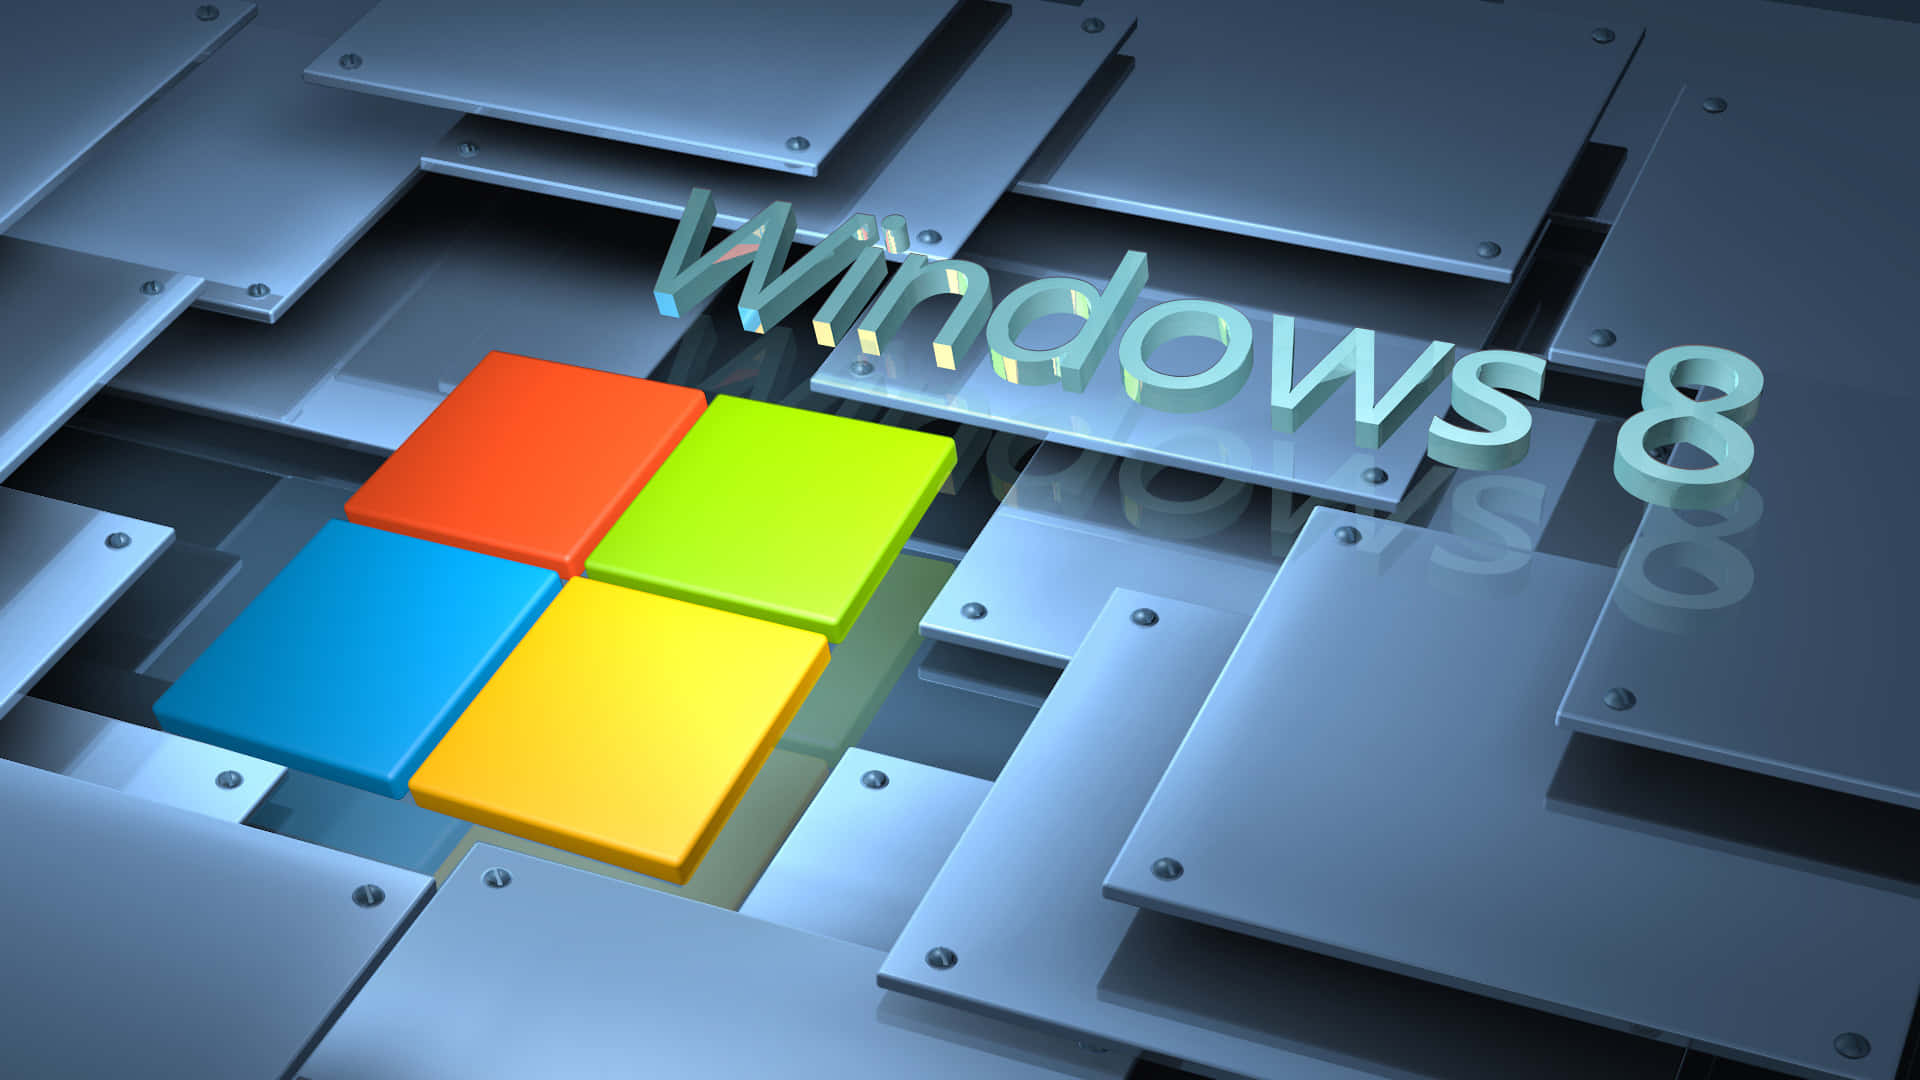 Sleek Windows 8 geometric background